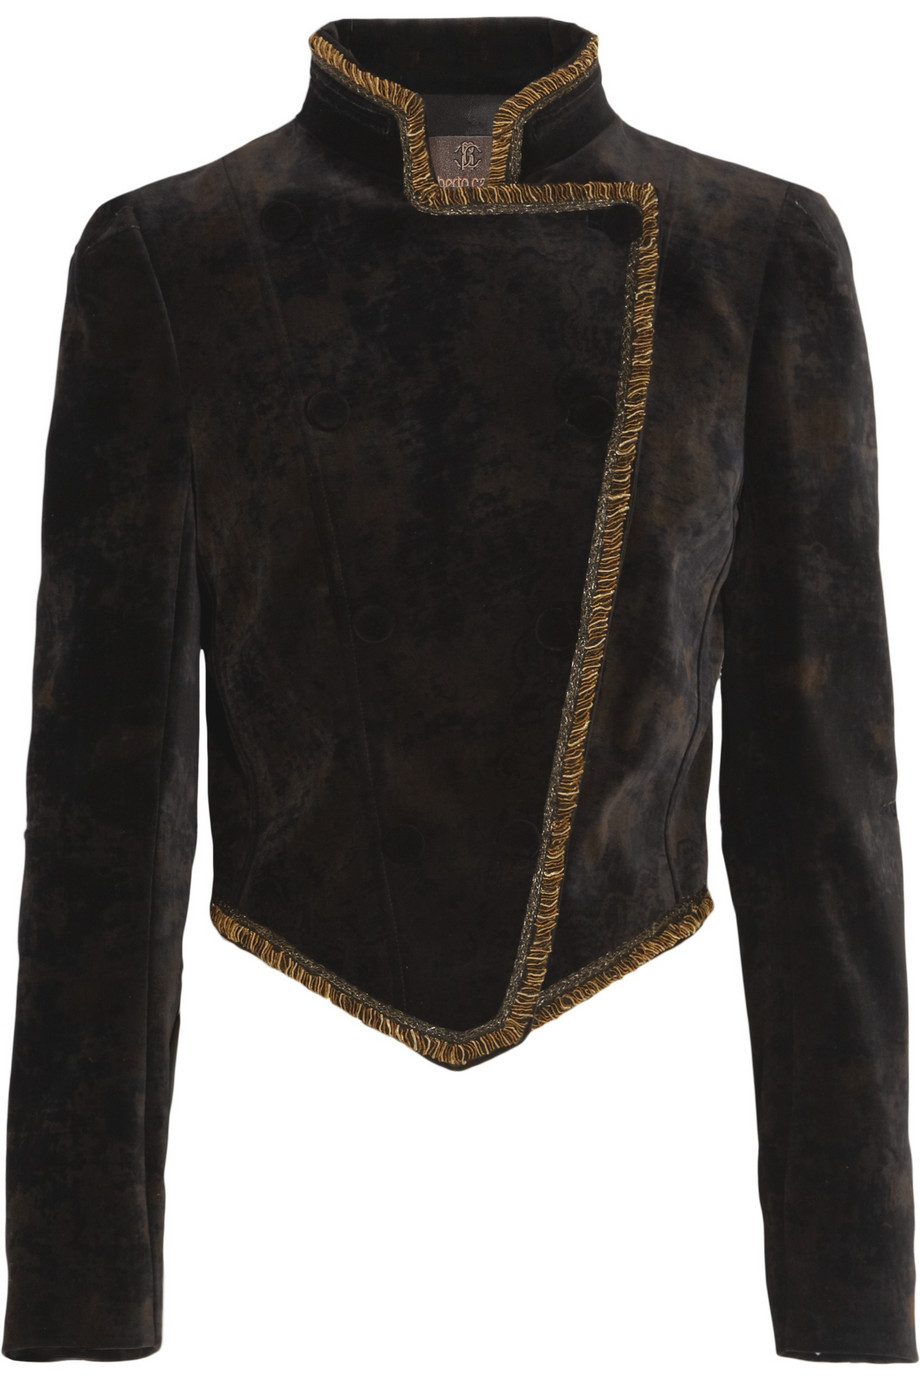 Roberto Cavalli black-brown jacket